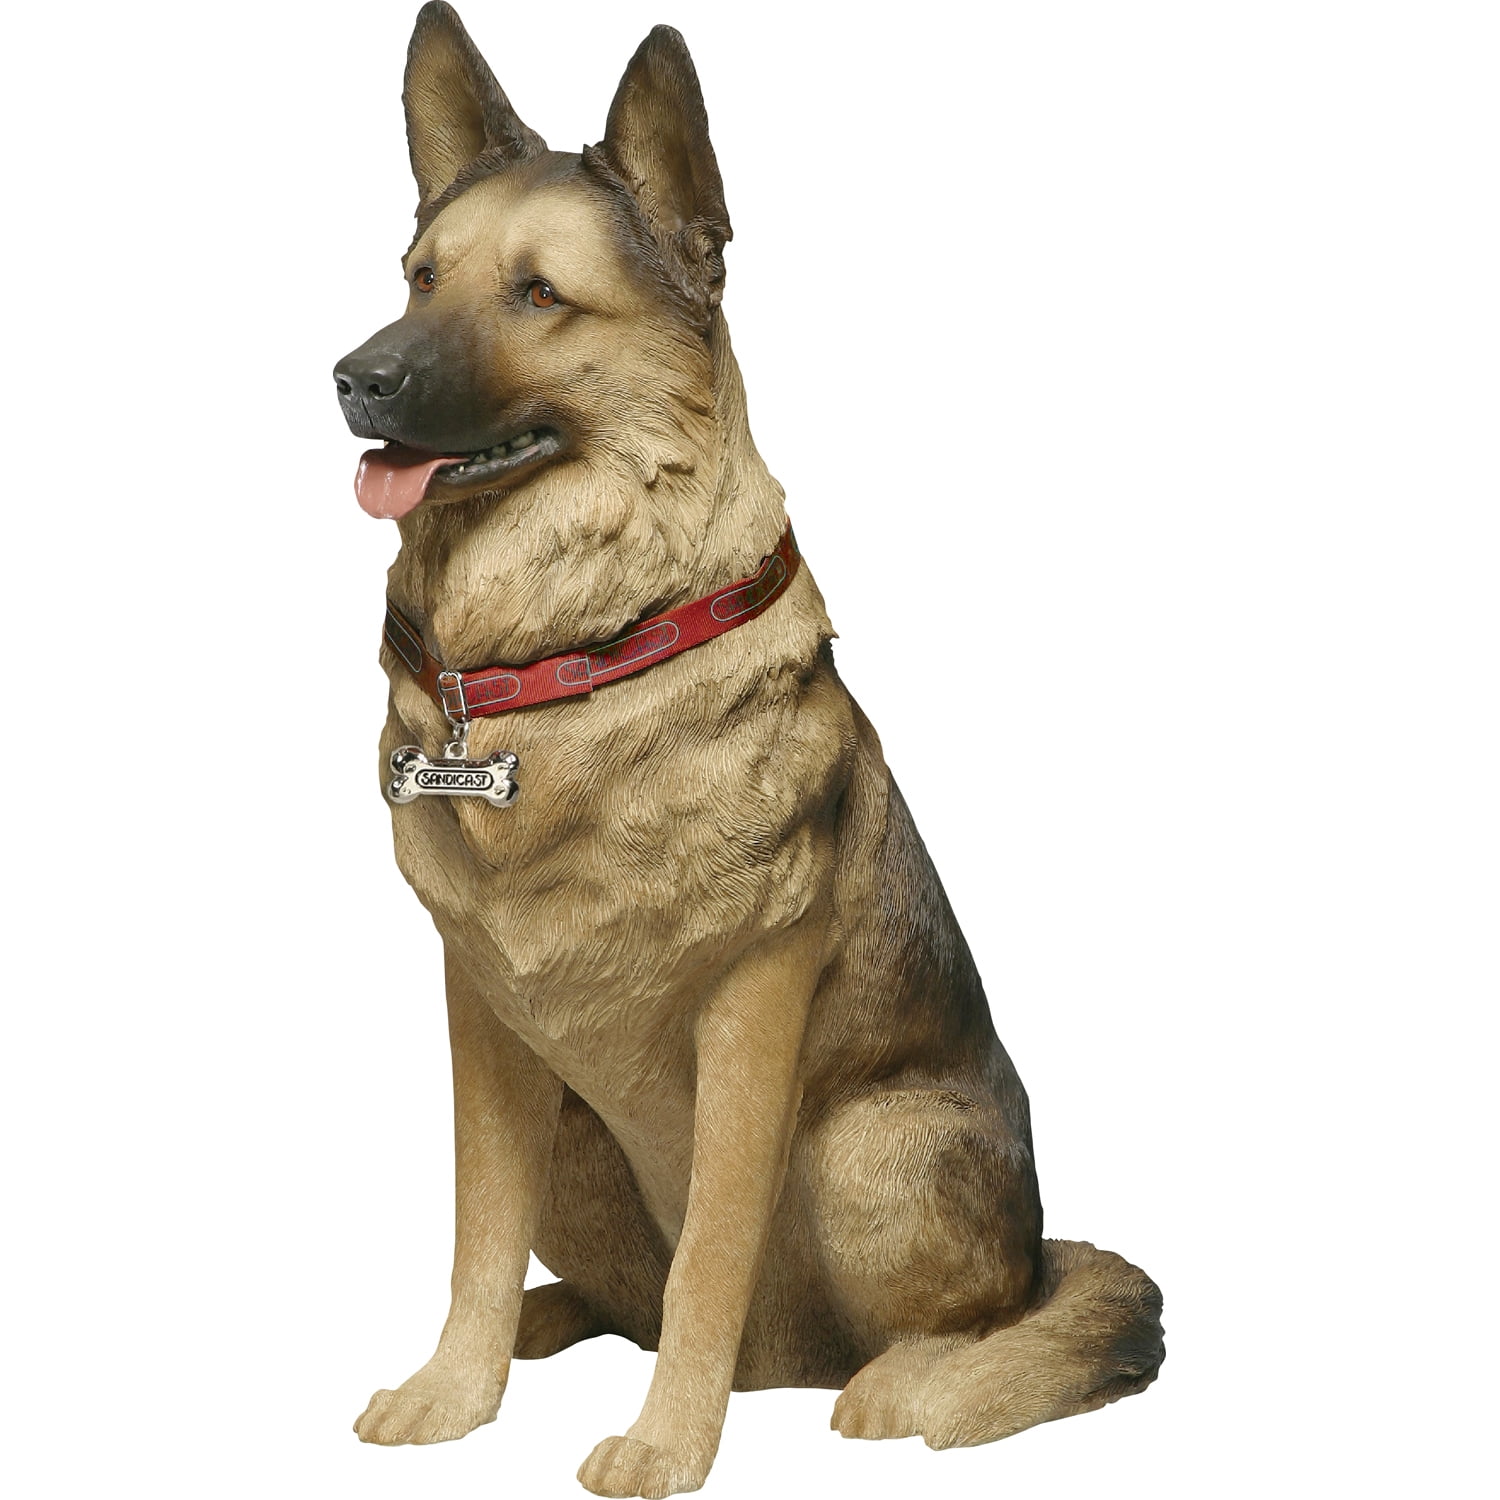 message me for a custom sculpture of your dog Custom German Shepherd Sculpture